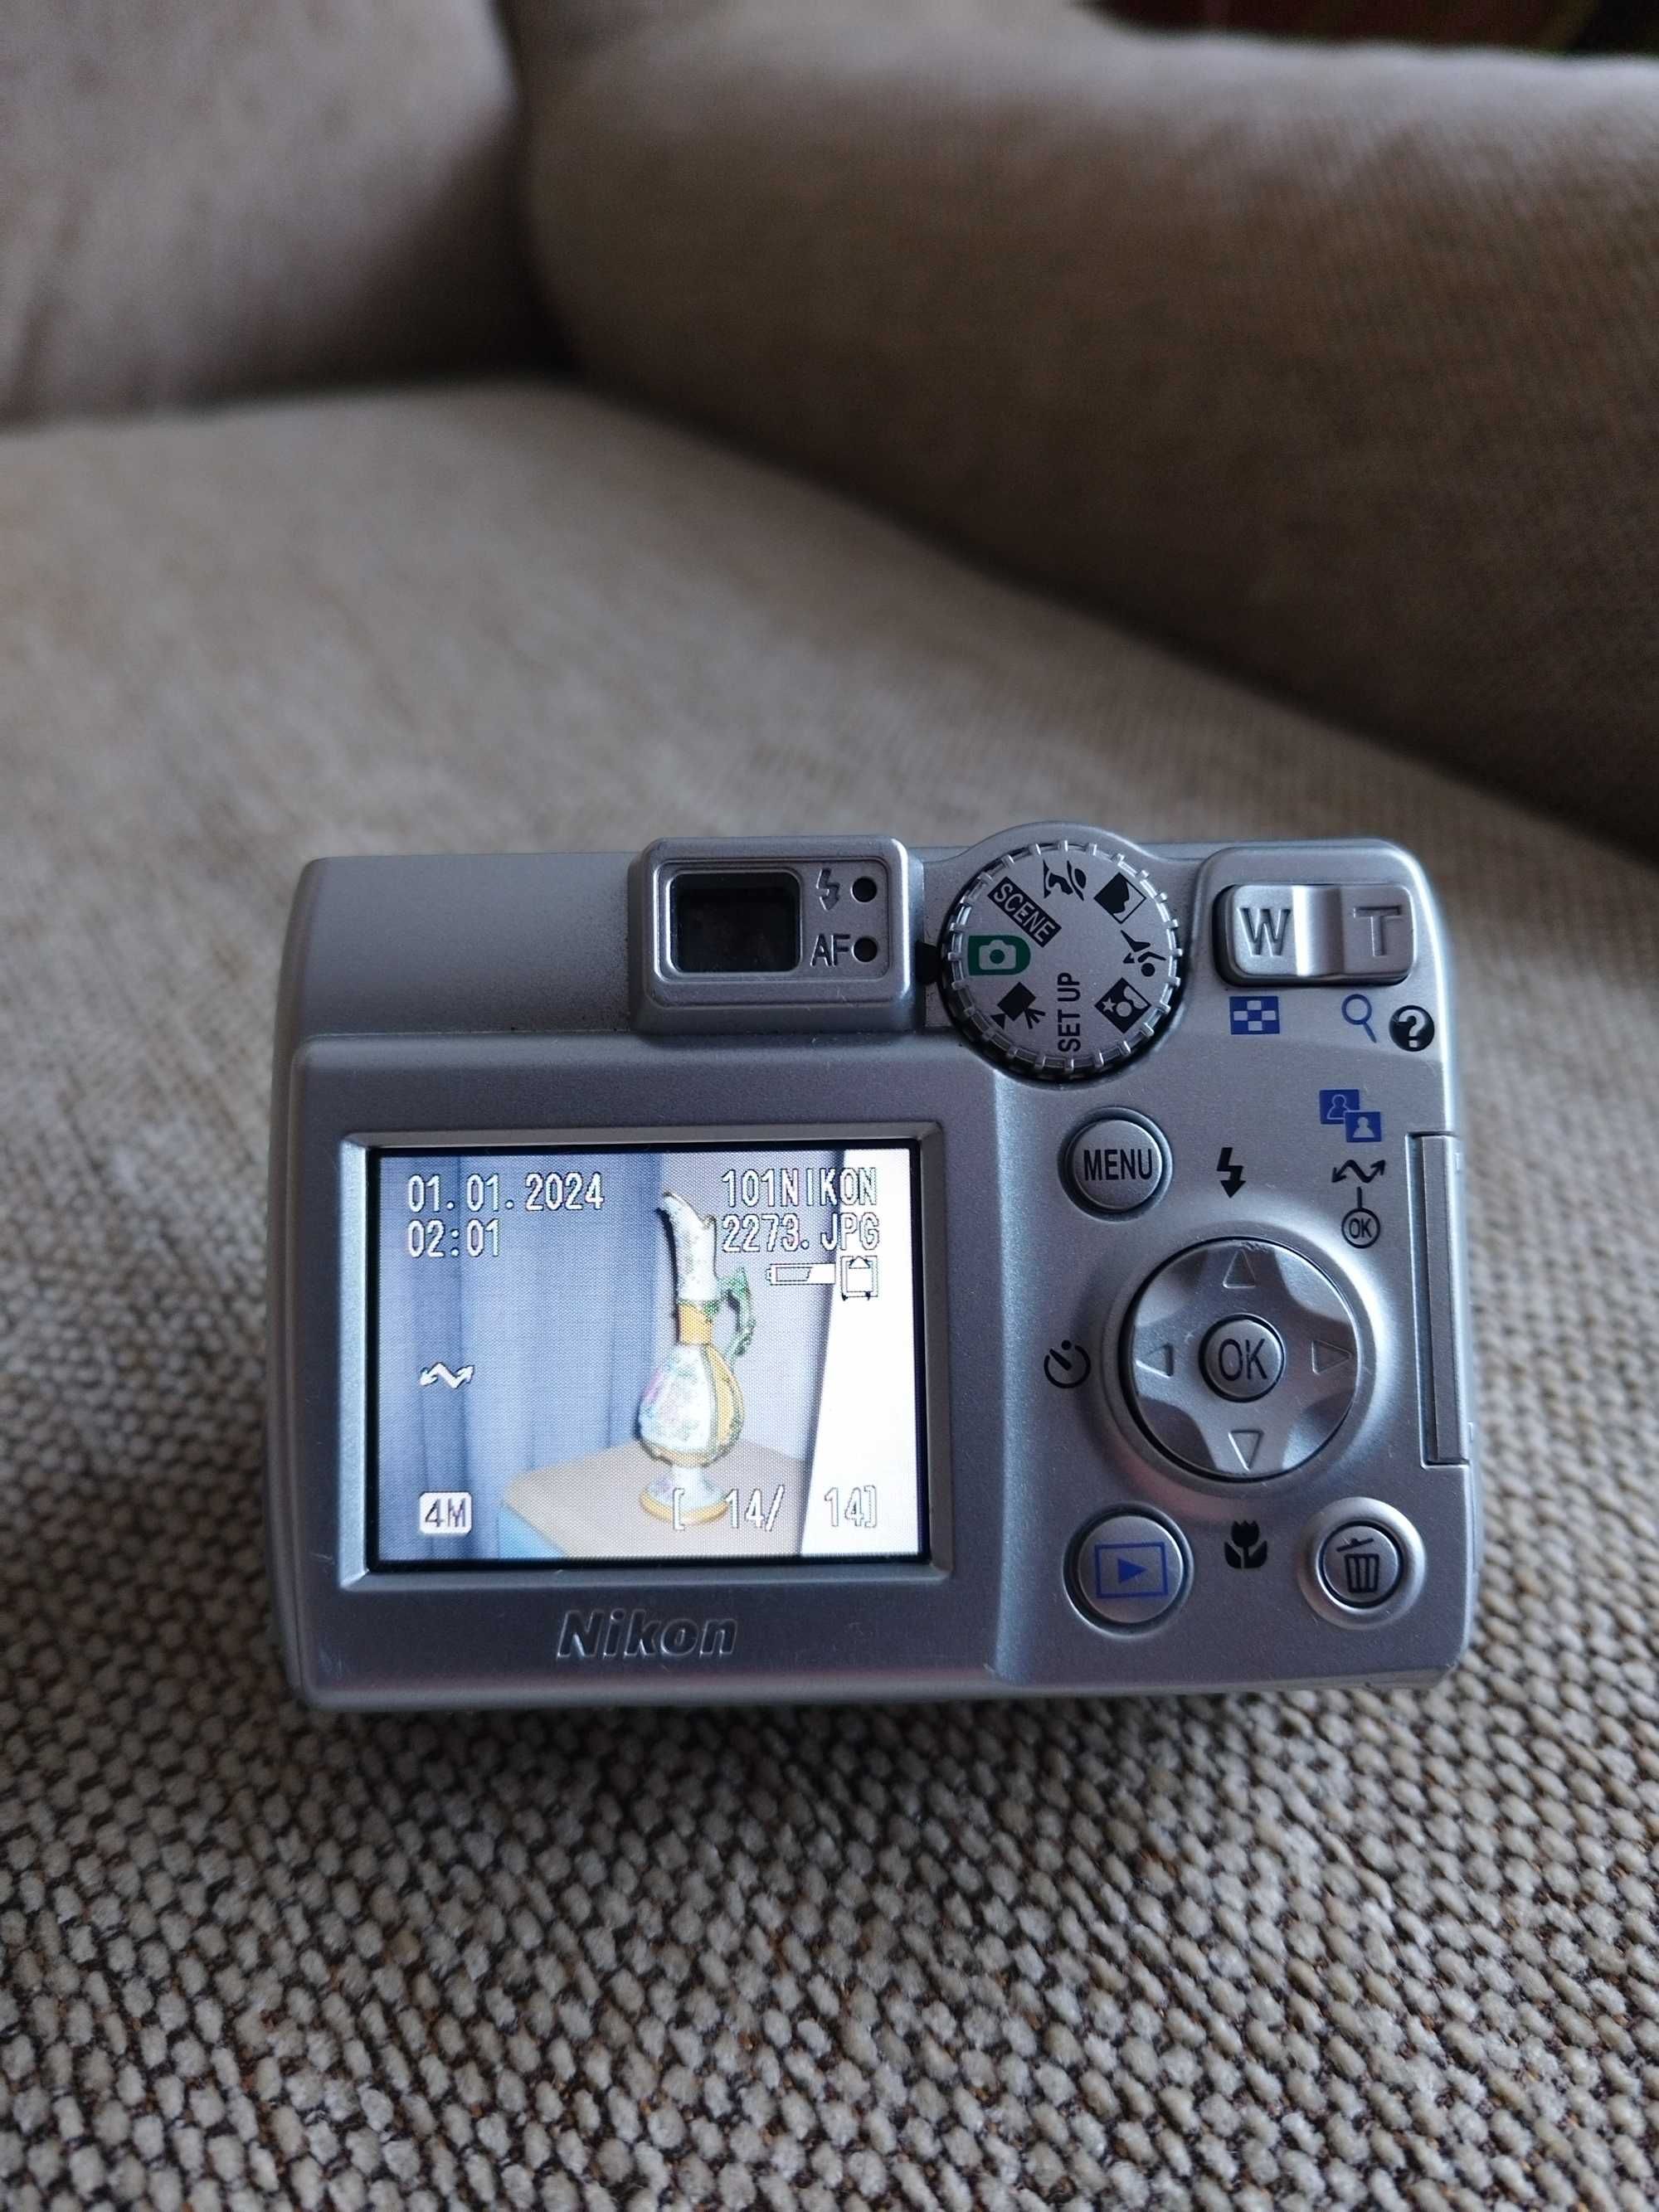 Aparat foto Nikon E 4600 , 4 megapixels Japan card memorie